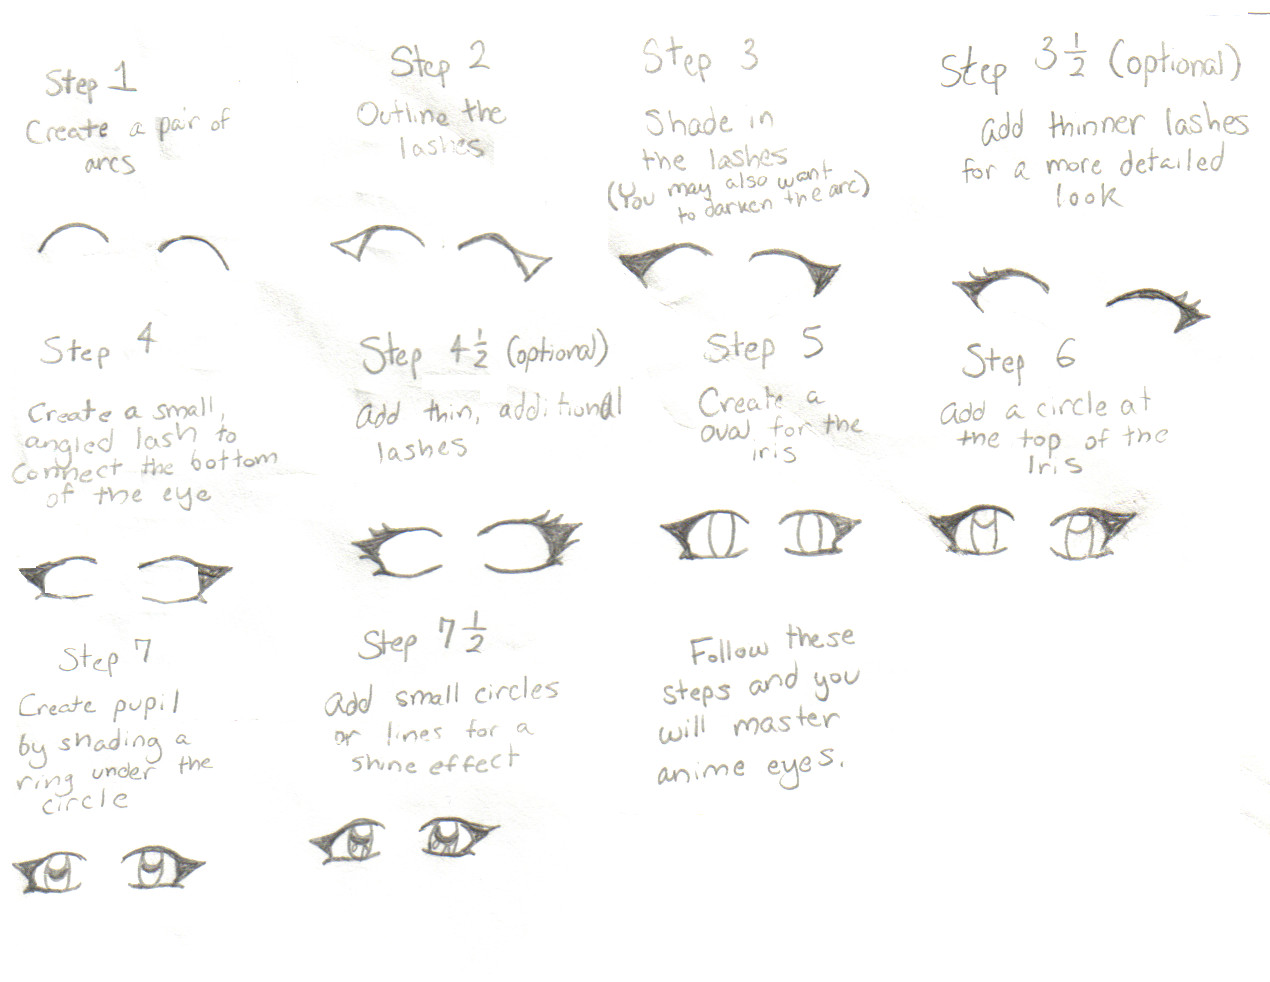 How to Draw Female Anime Eyes by KionaKina - Fanart Central